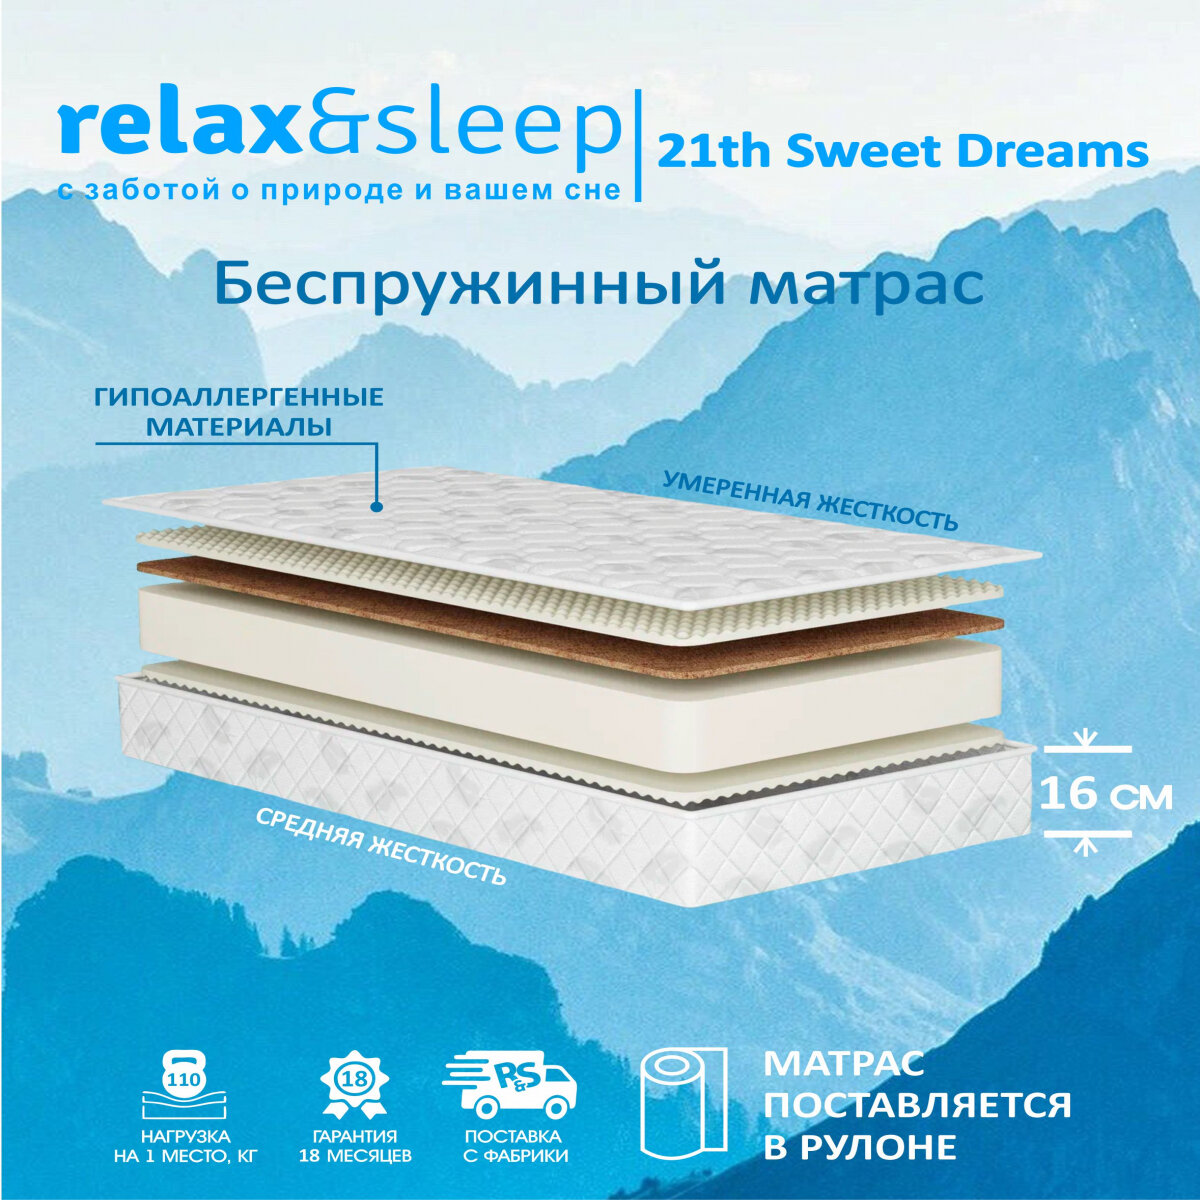 Матрас Relax&Sleep ортопедический беспружинный 21th Sweet Dreams (80 / 185)